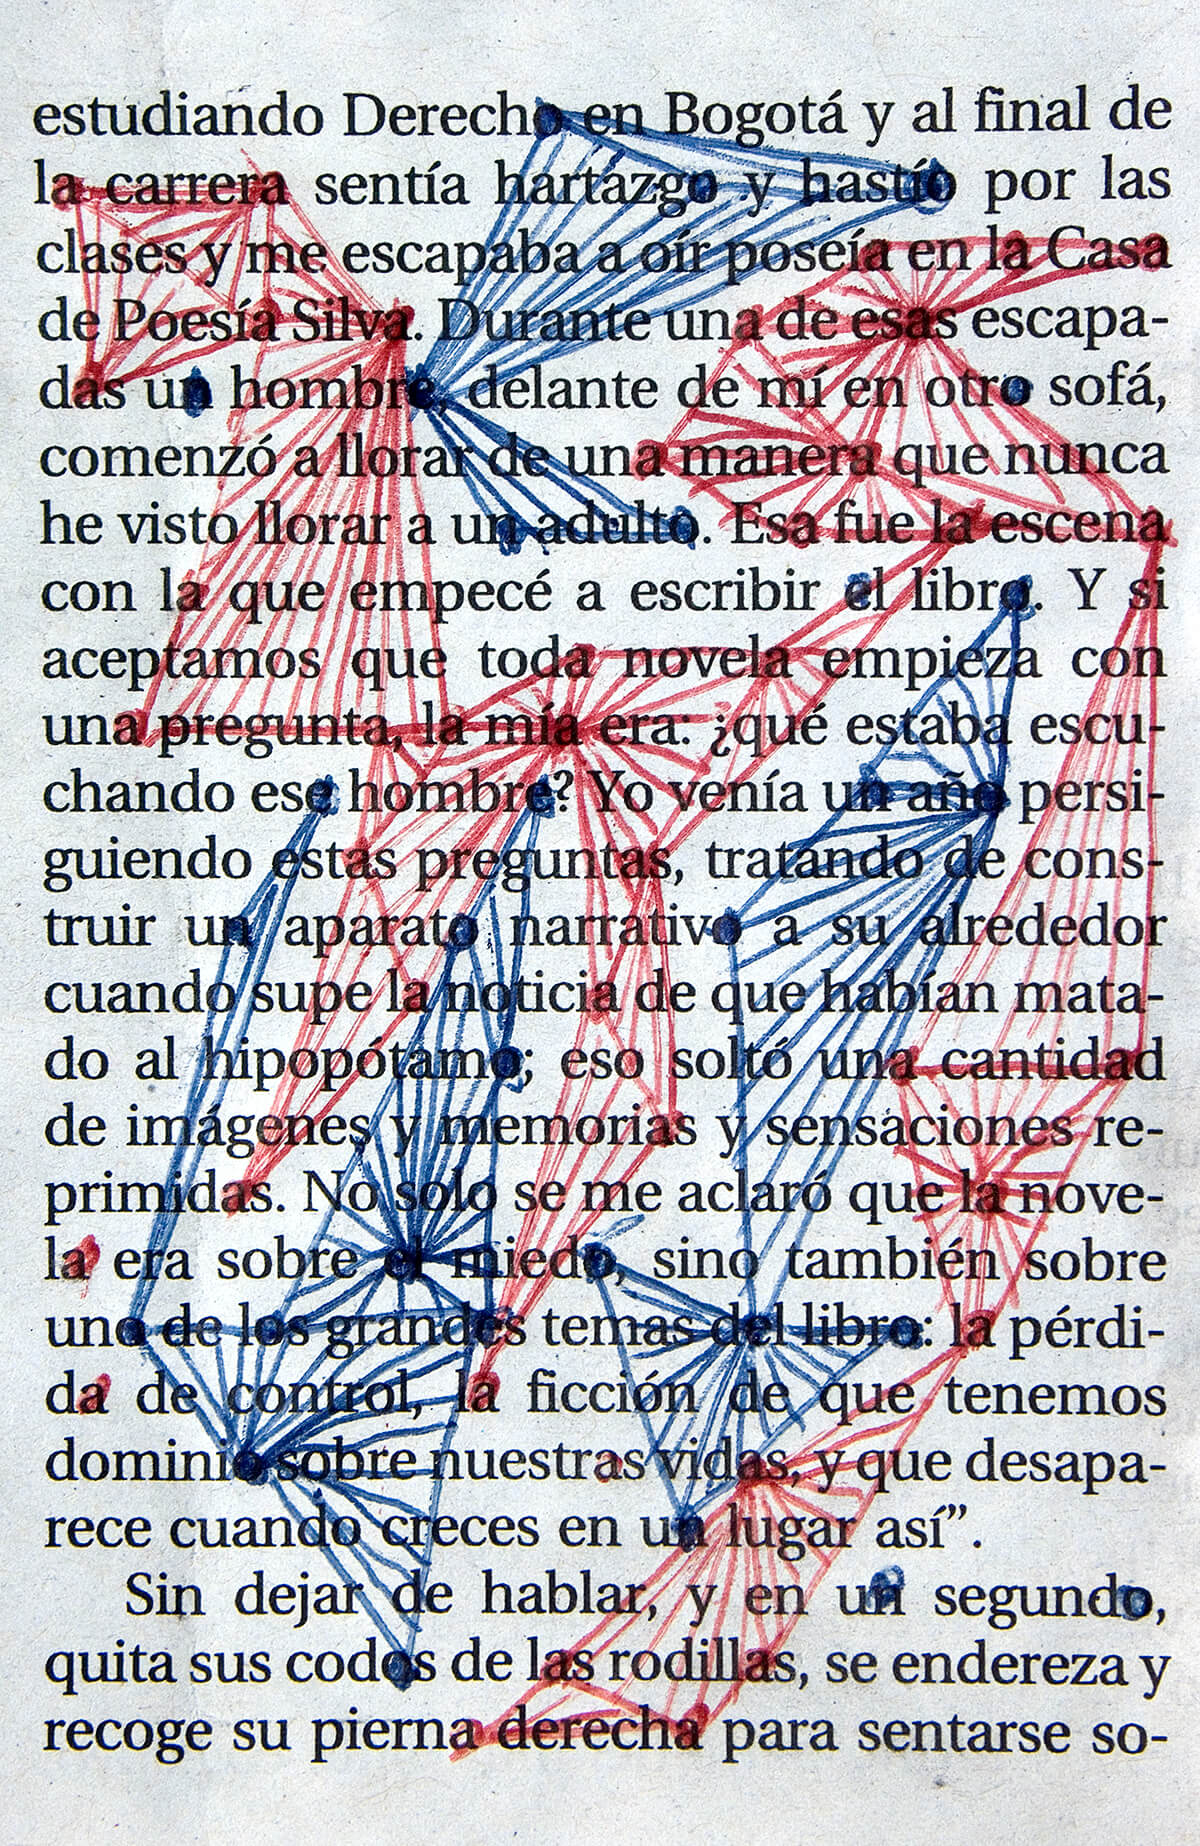 Estudiando, 9 x 14 cm, ink on newspaper, 2014